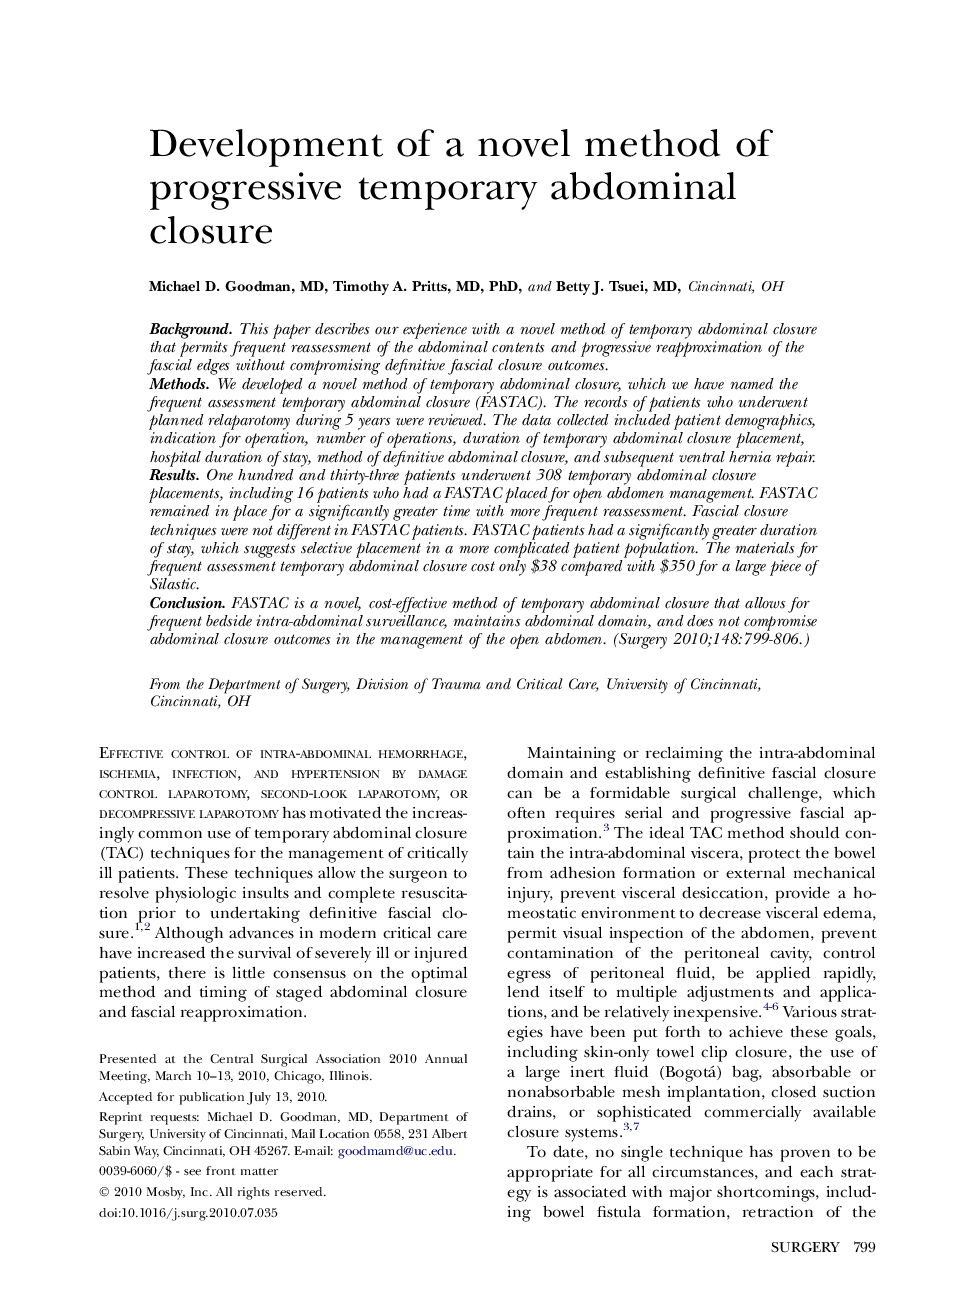 Development of a novel method of progressive temporary abdominal closure